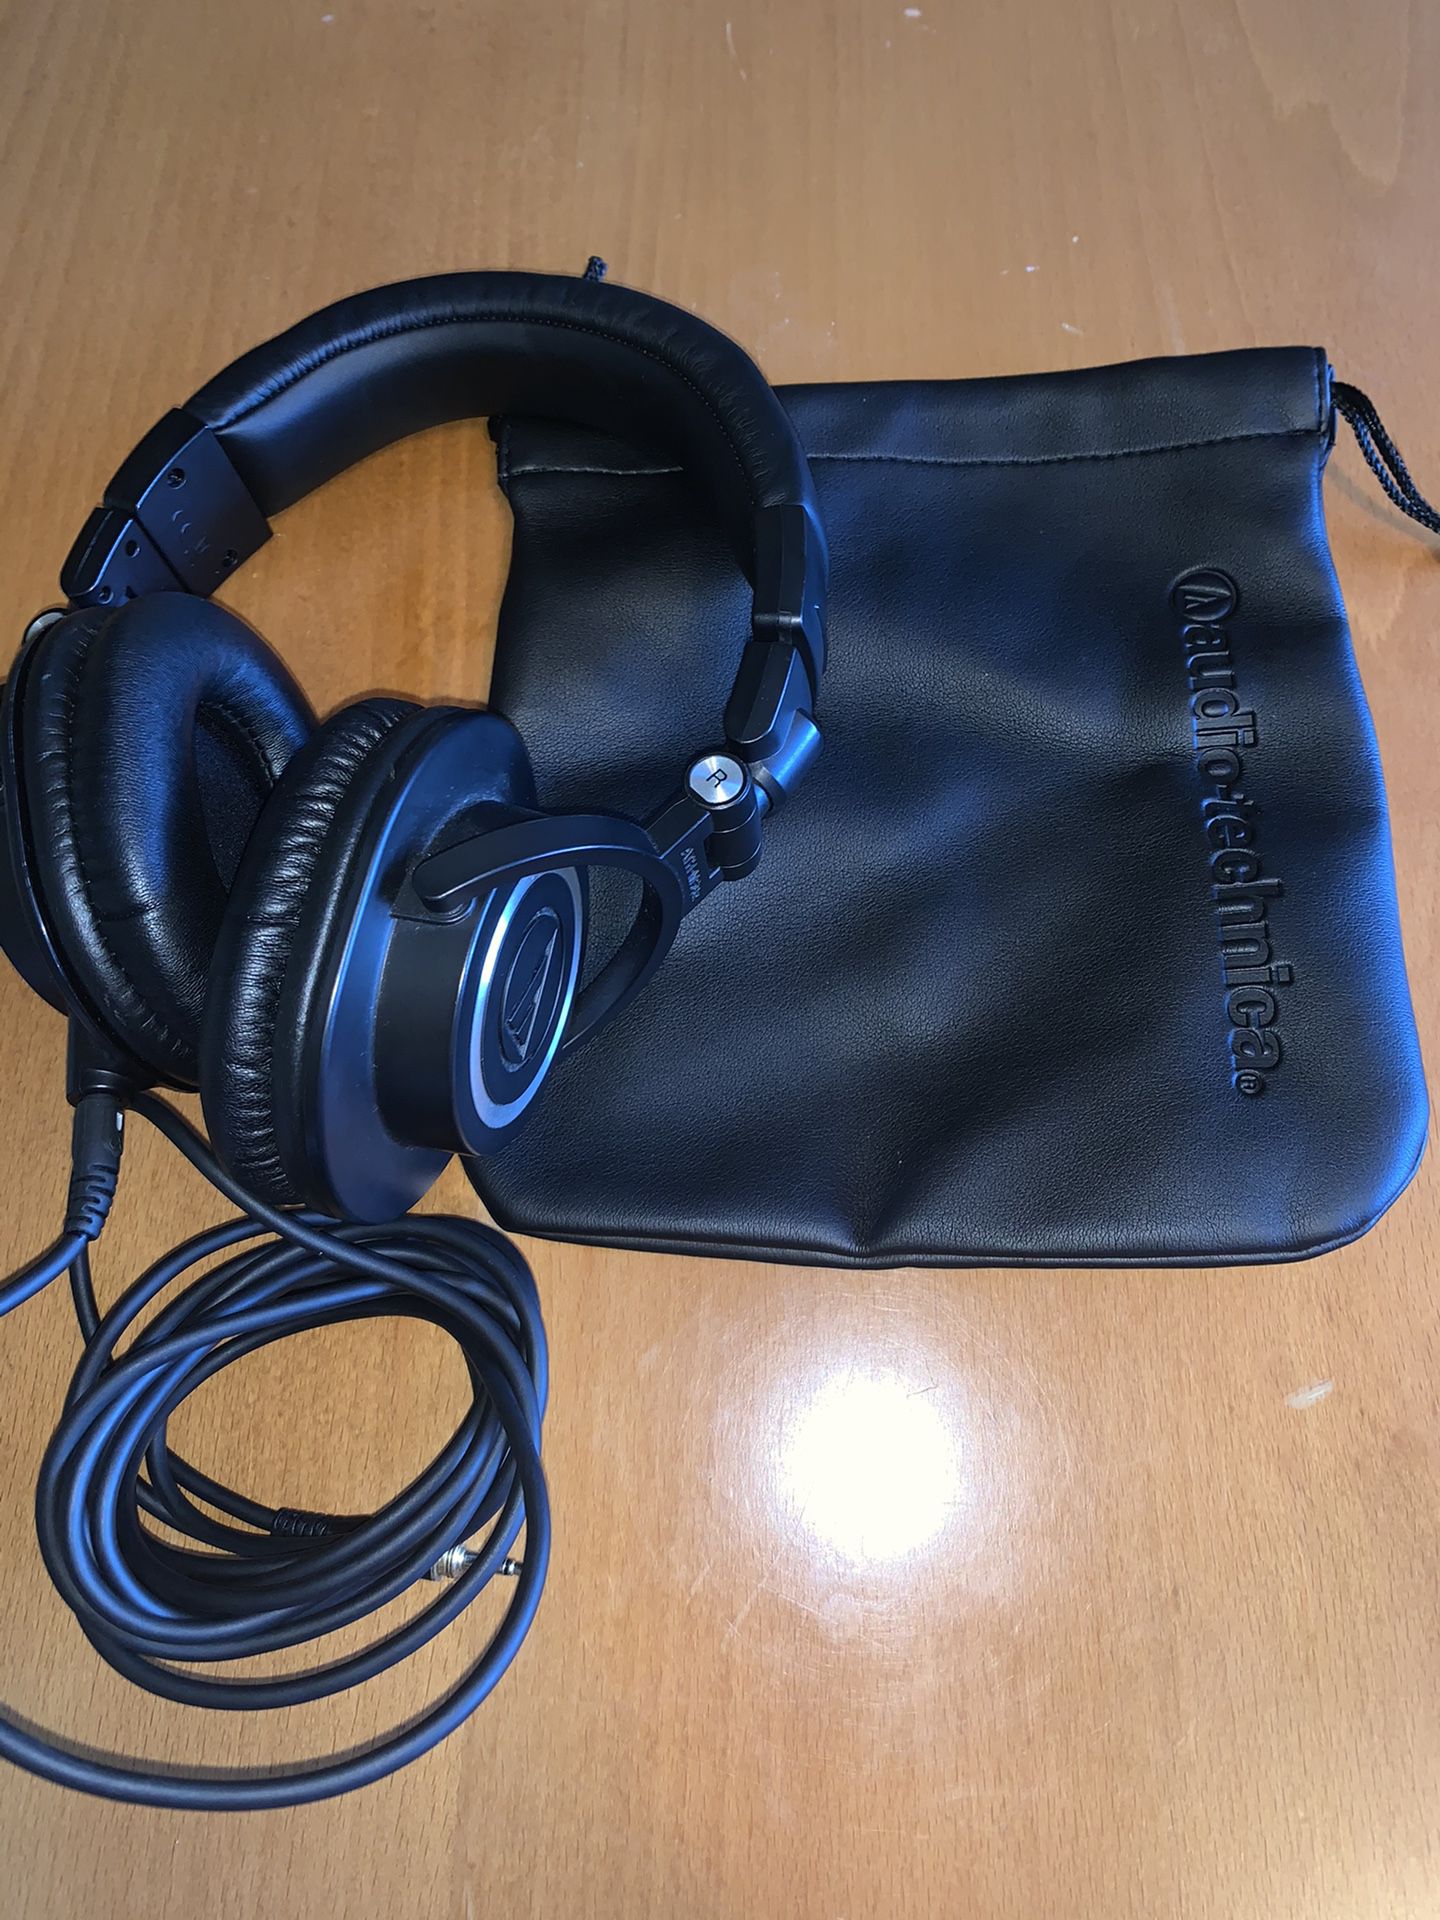 New Headphones (audio technica brand) with carry case